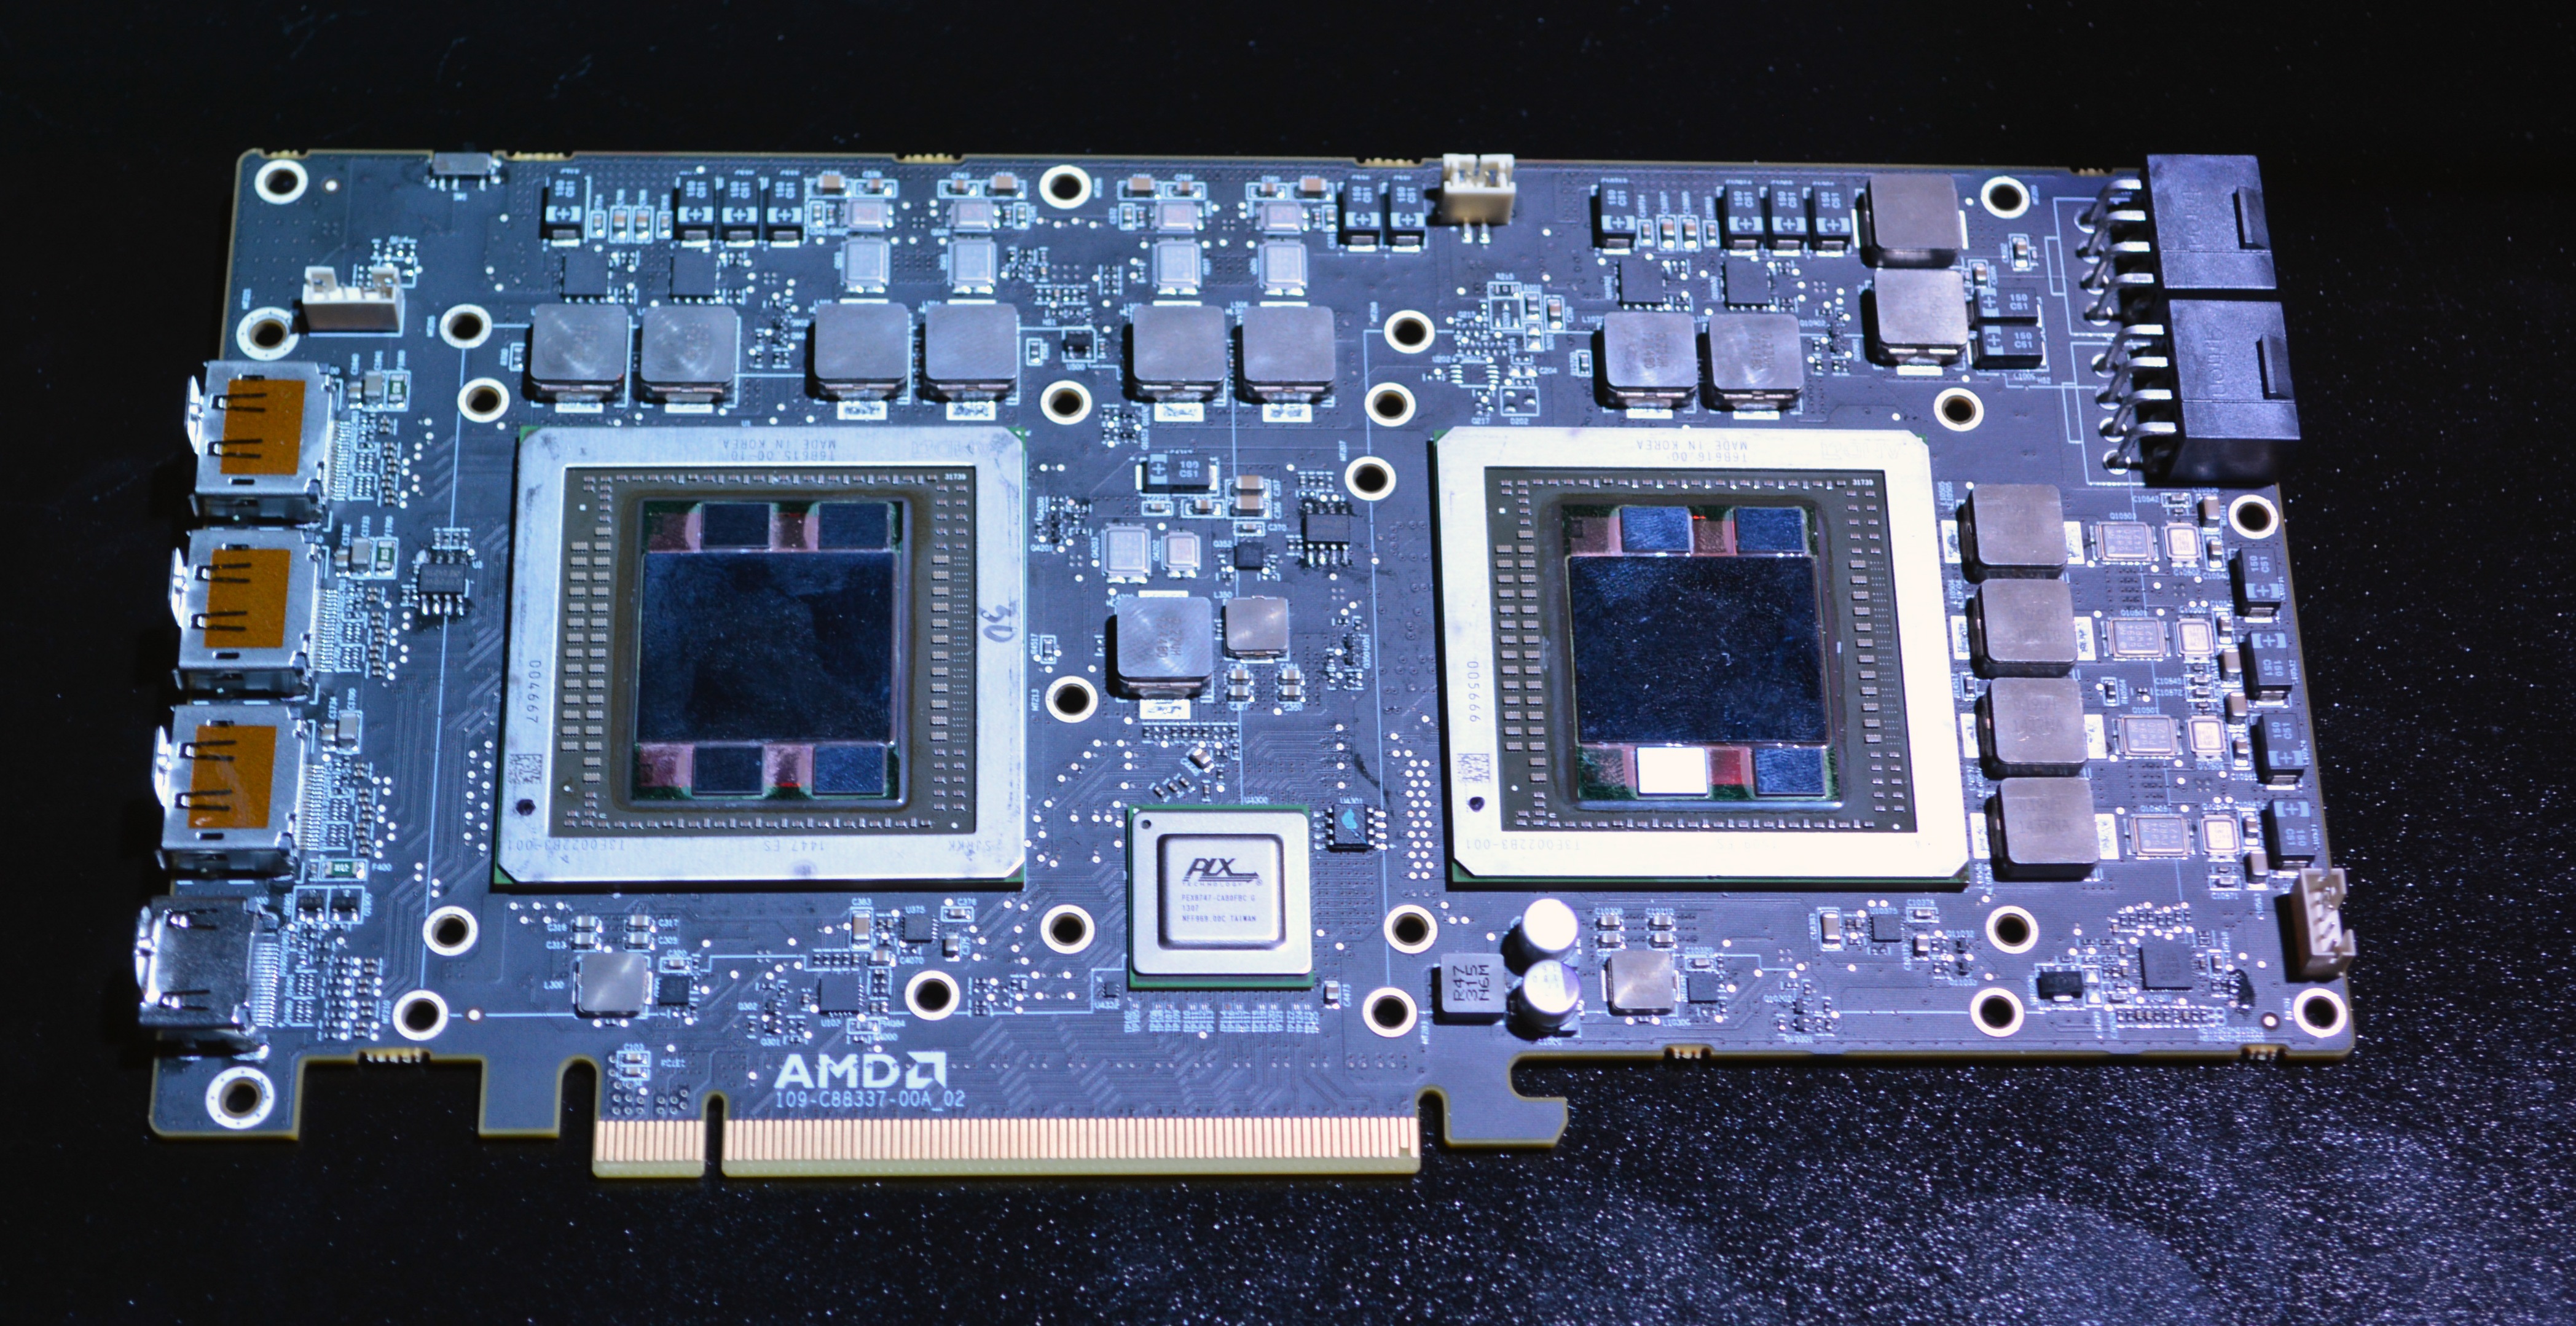 AMD Fury X2 Dual Fiji GPU Confirmed To Be Powering Demo at VRLA